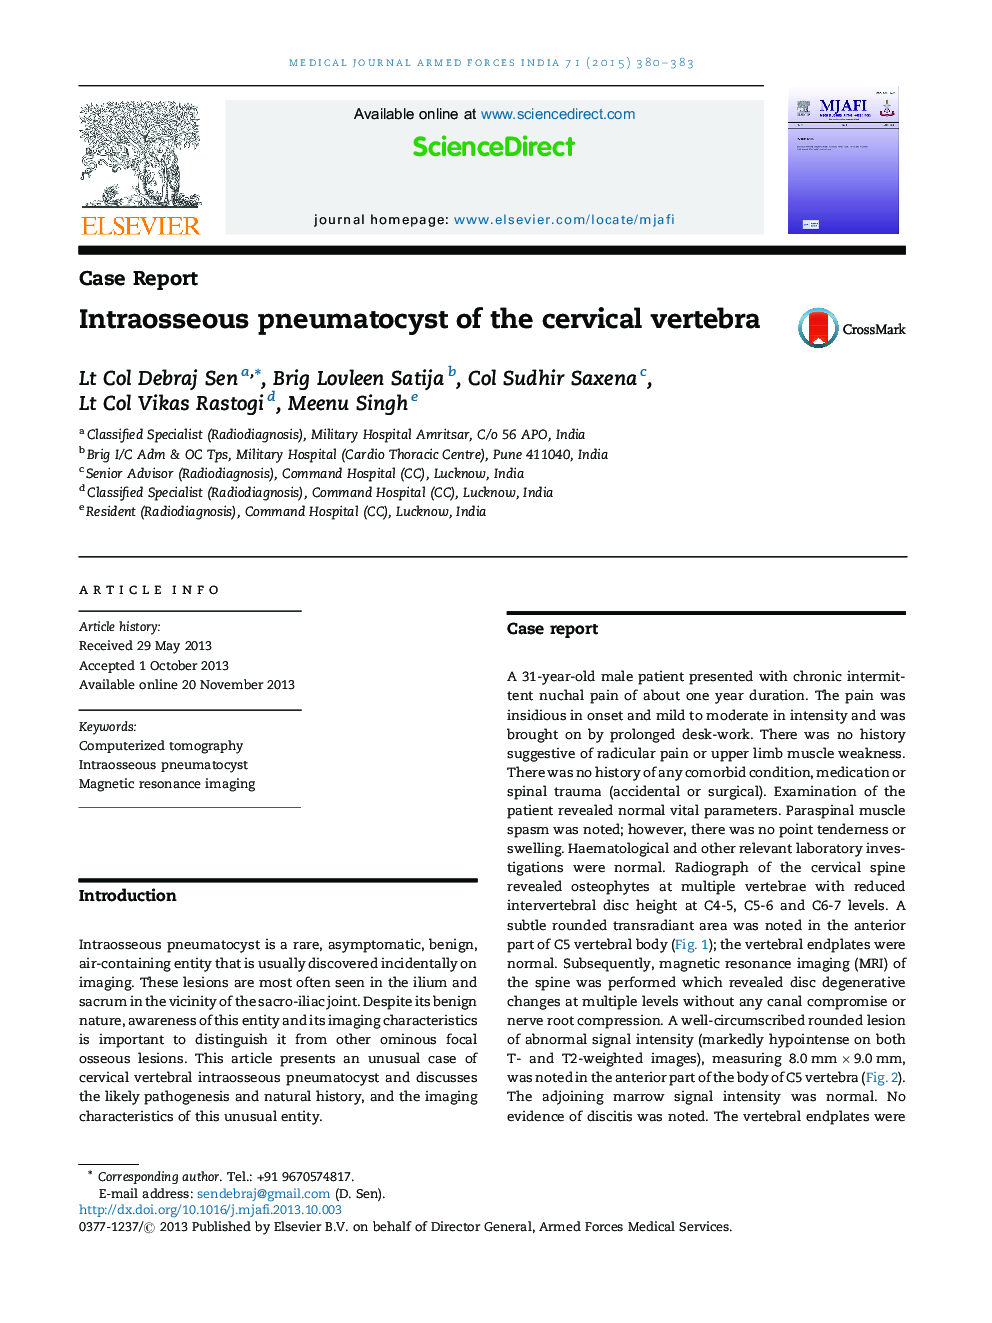 Intraosseous pneumatocyst of the cervical vertebra